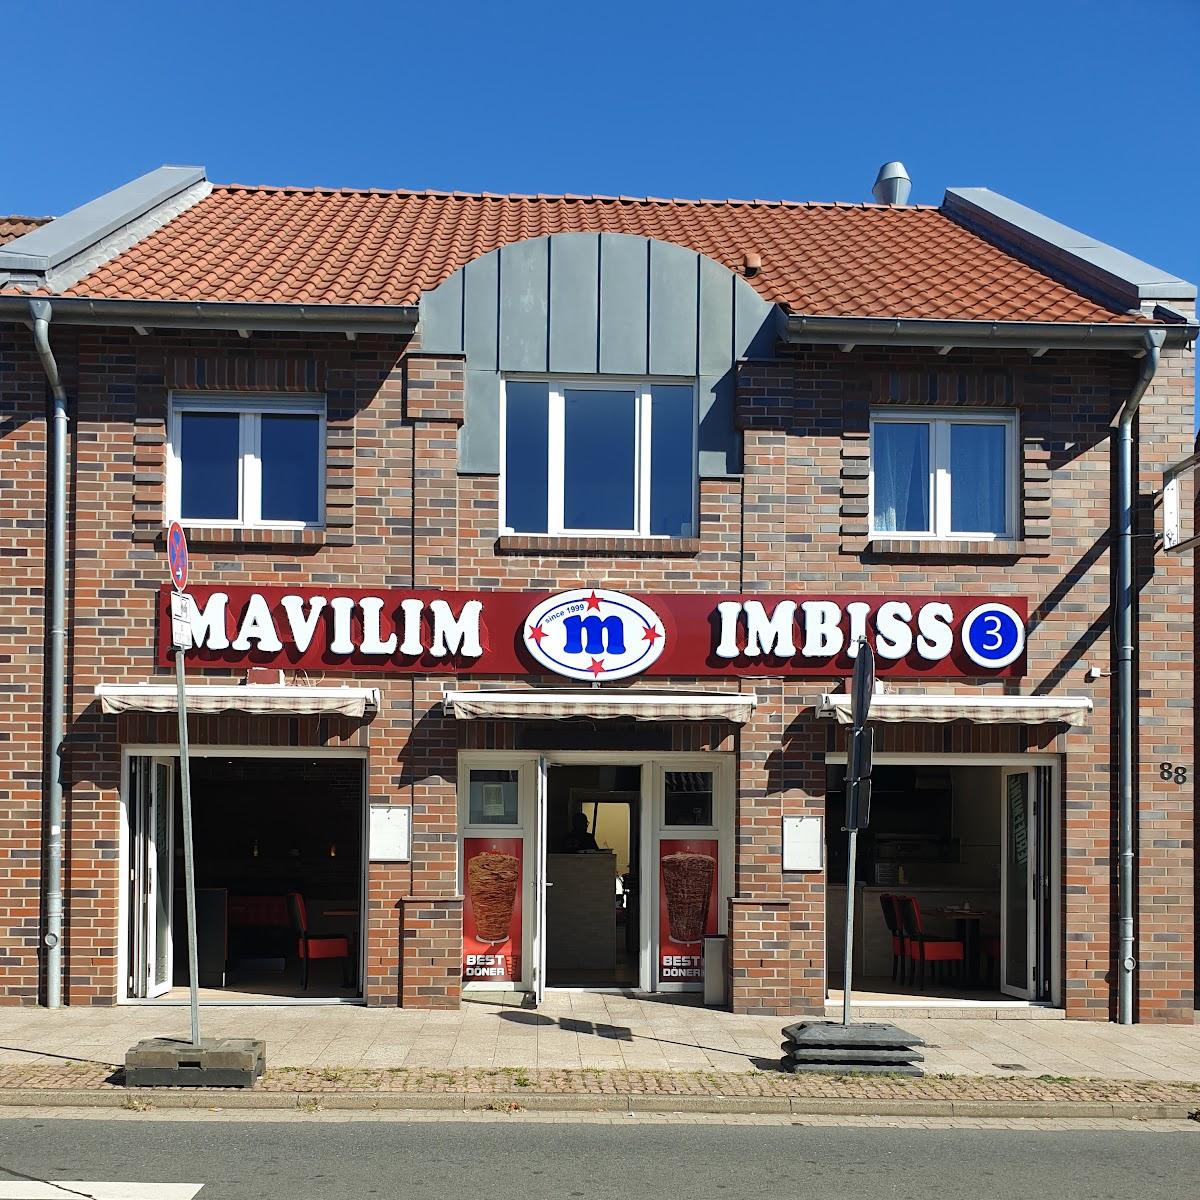 Restaurant "Mavilim Imbiss 3" in Walsrode